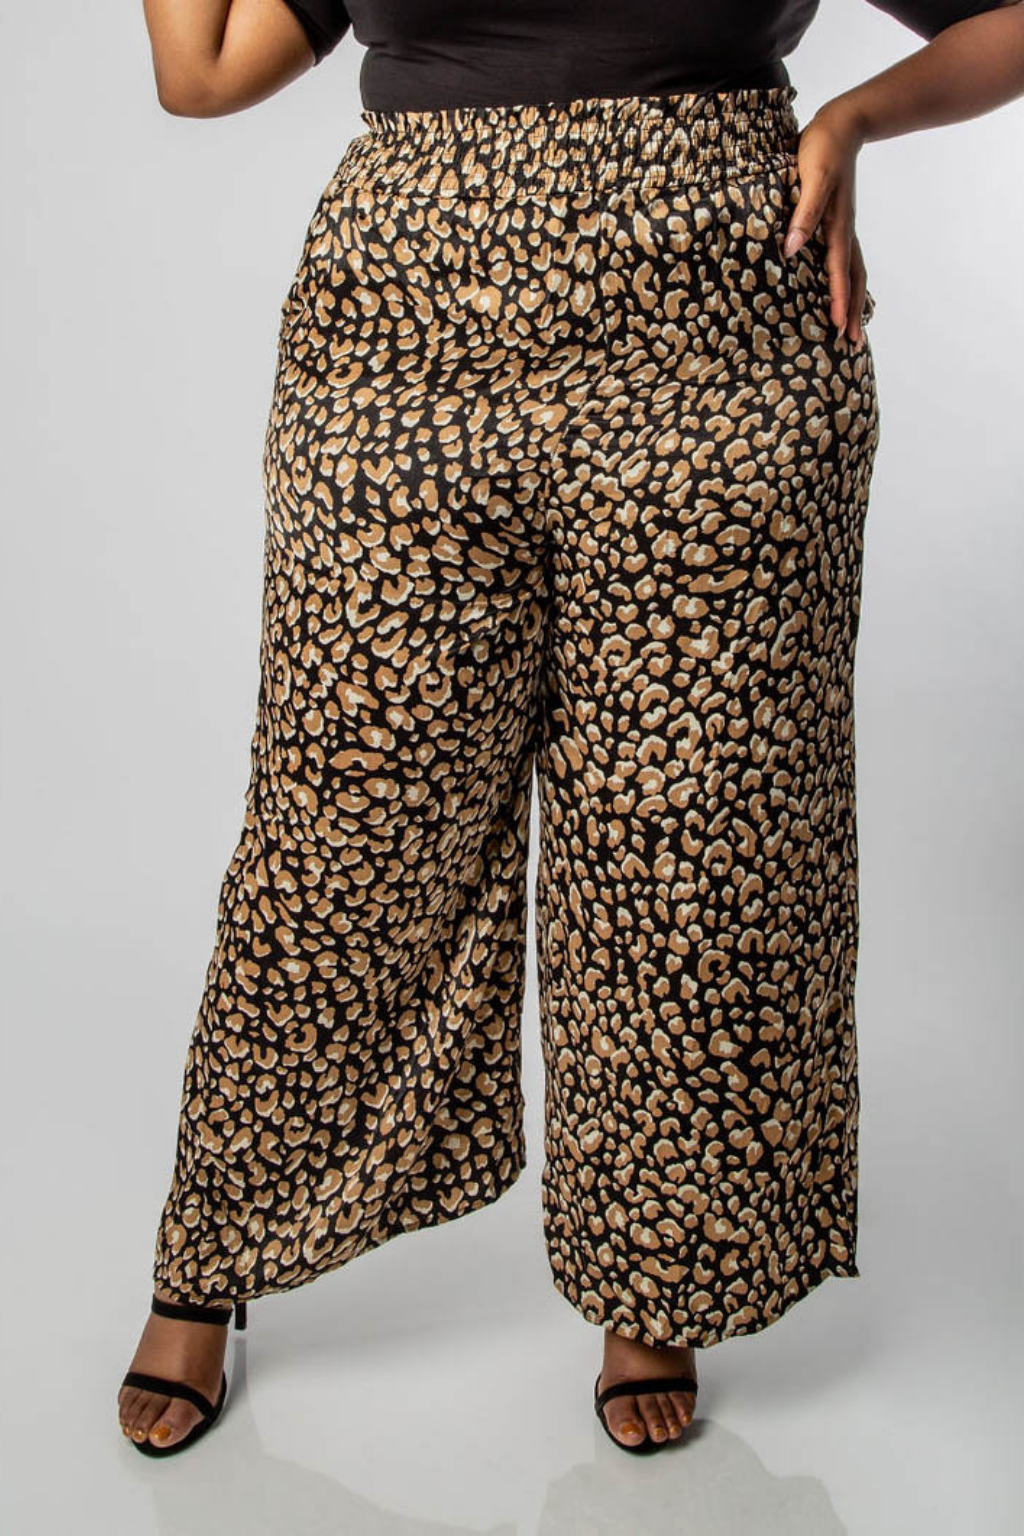 Wholesale S-XL Women Fashion High Waisted Leopard Print Wide Leg Pants